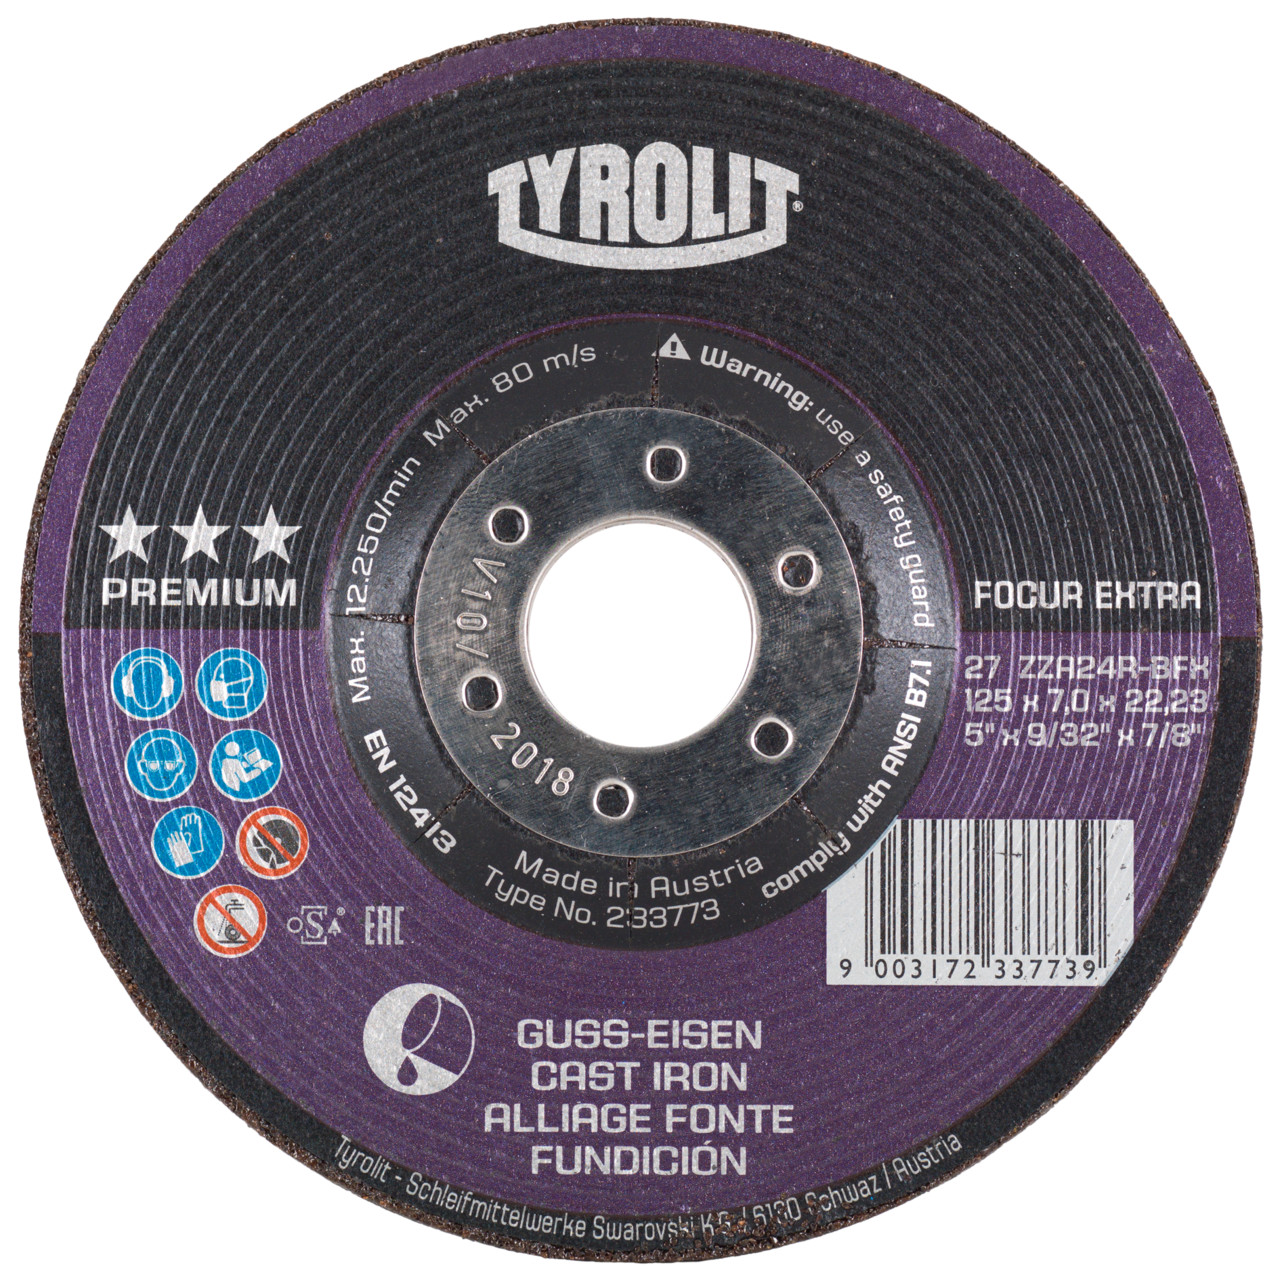 TYROLIT disco de desbaste DxUxH 230x4x22,23 FOCUR Extra para fundición gris, forma: 27 - versión offset, Art. 233777